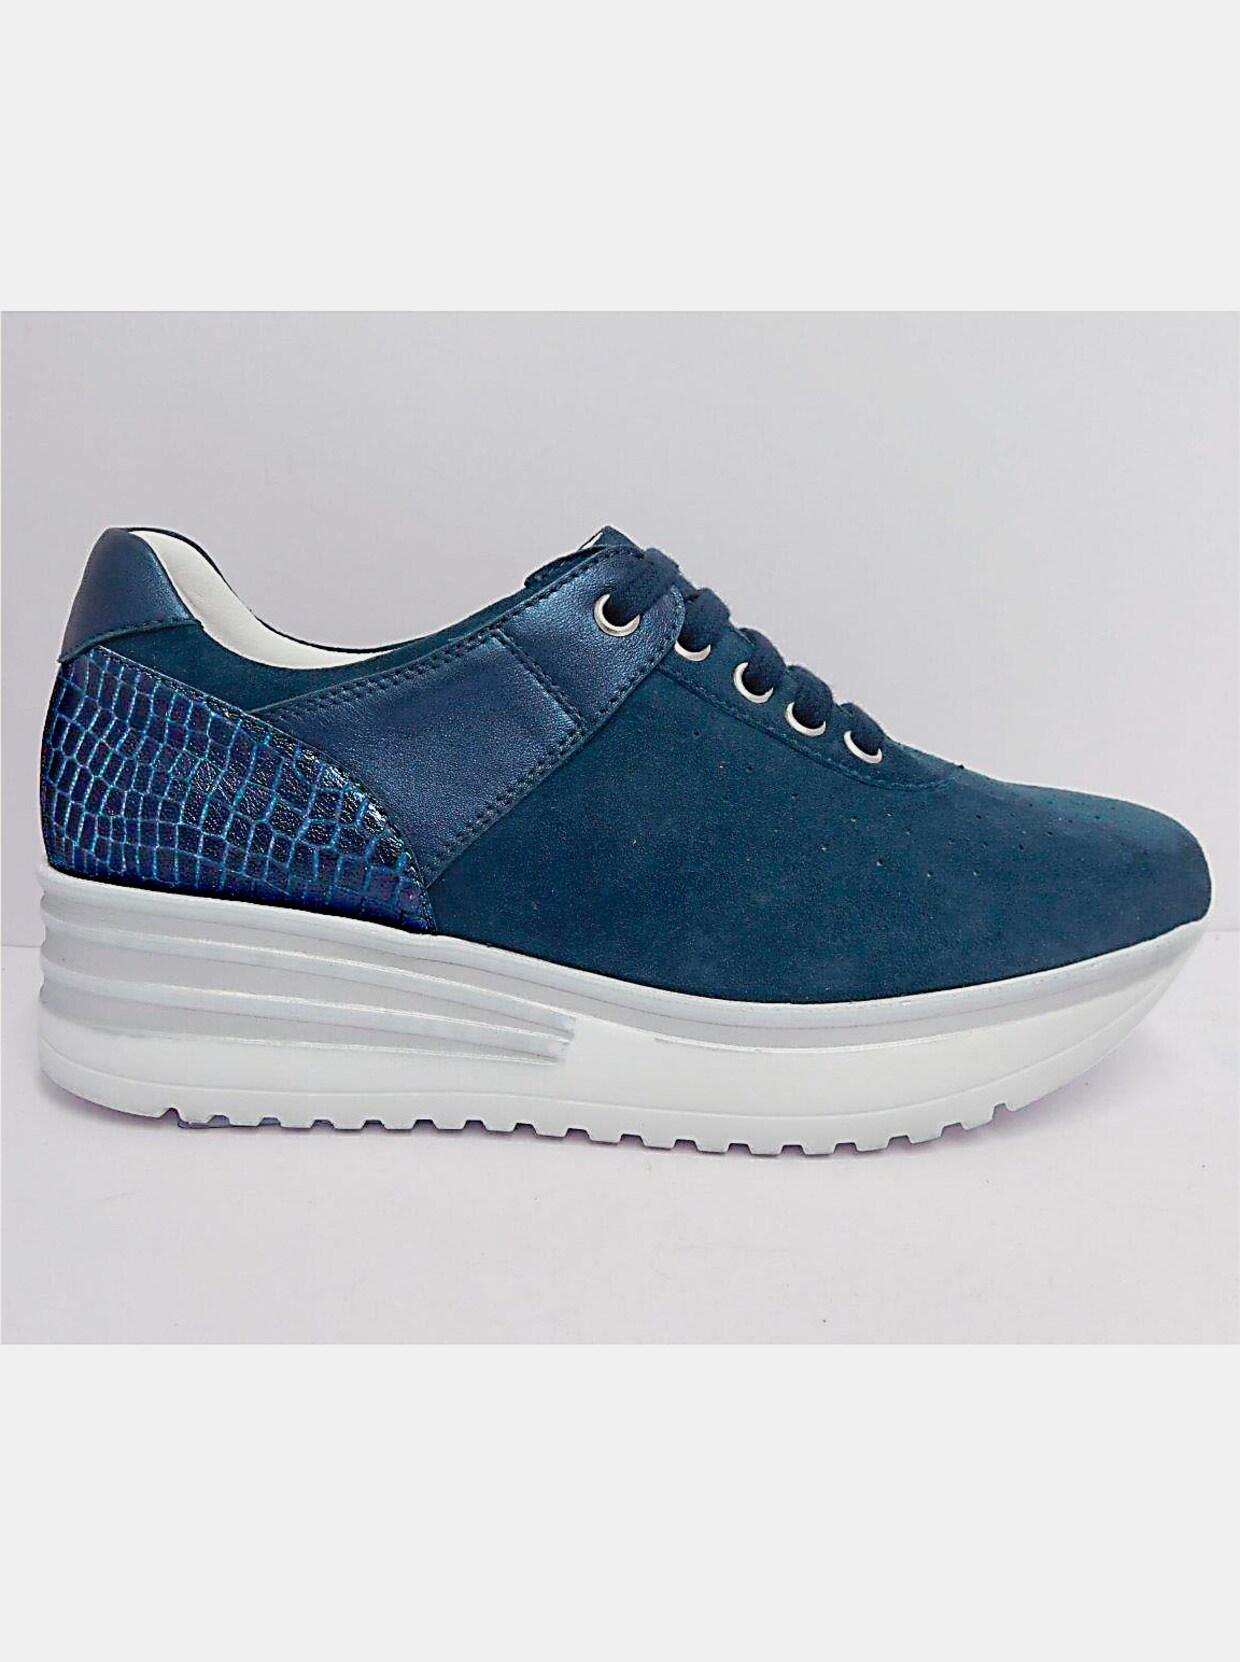 Airsoft Sneaker - jeansblau